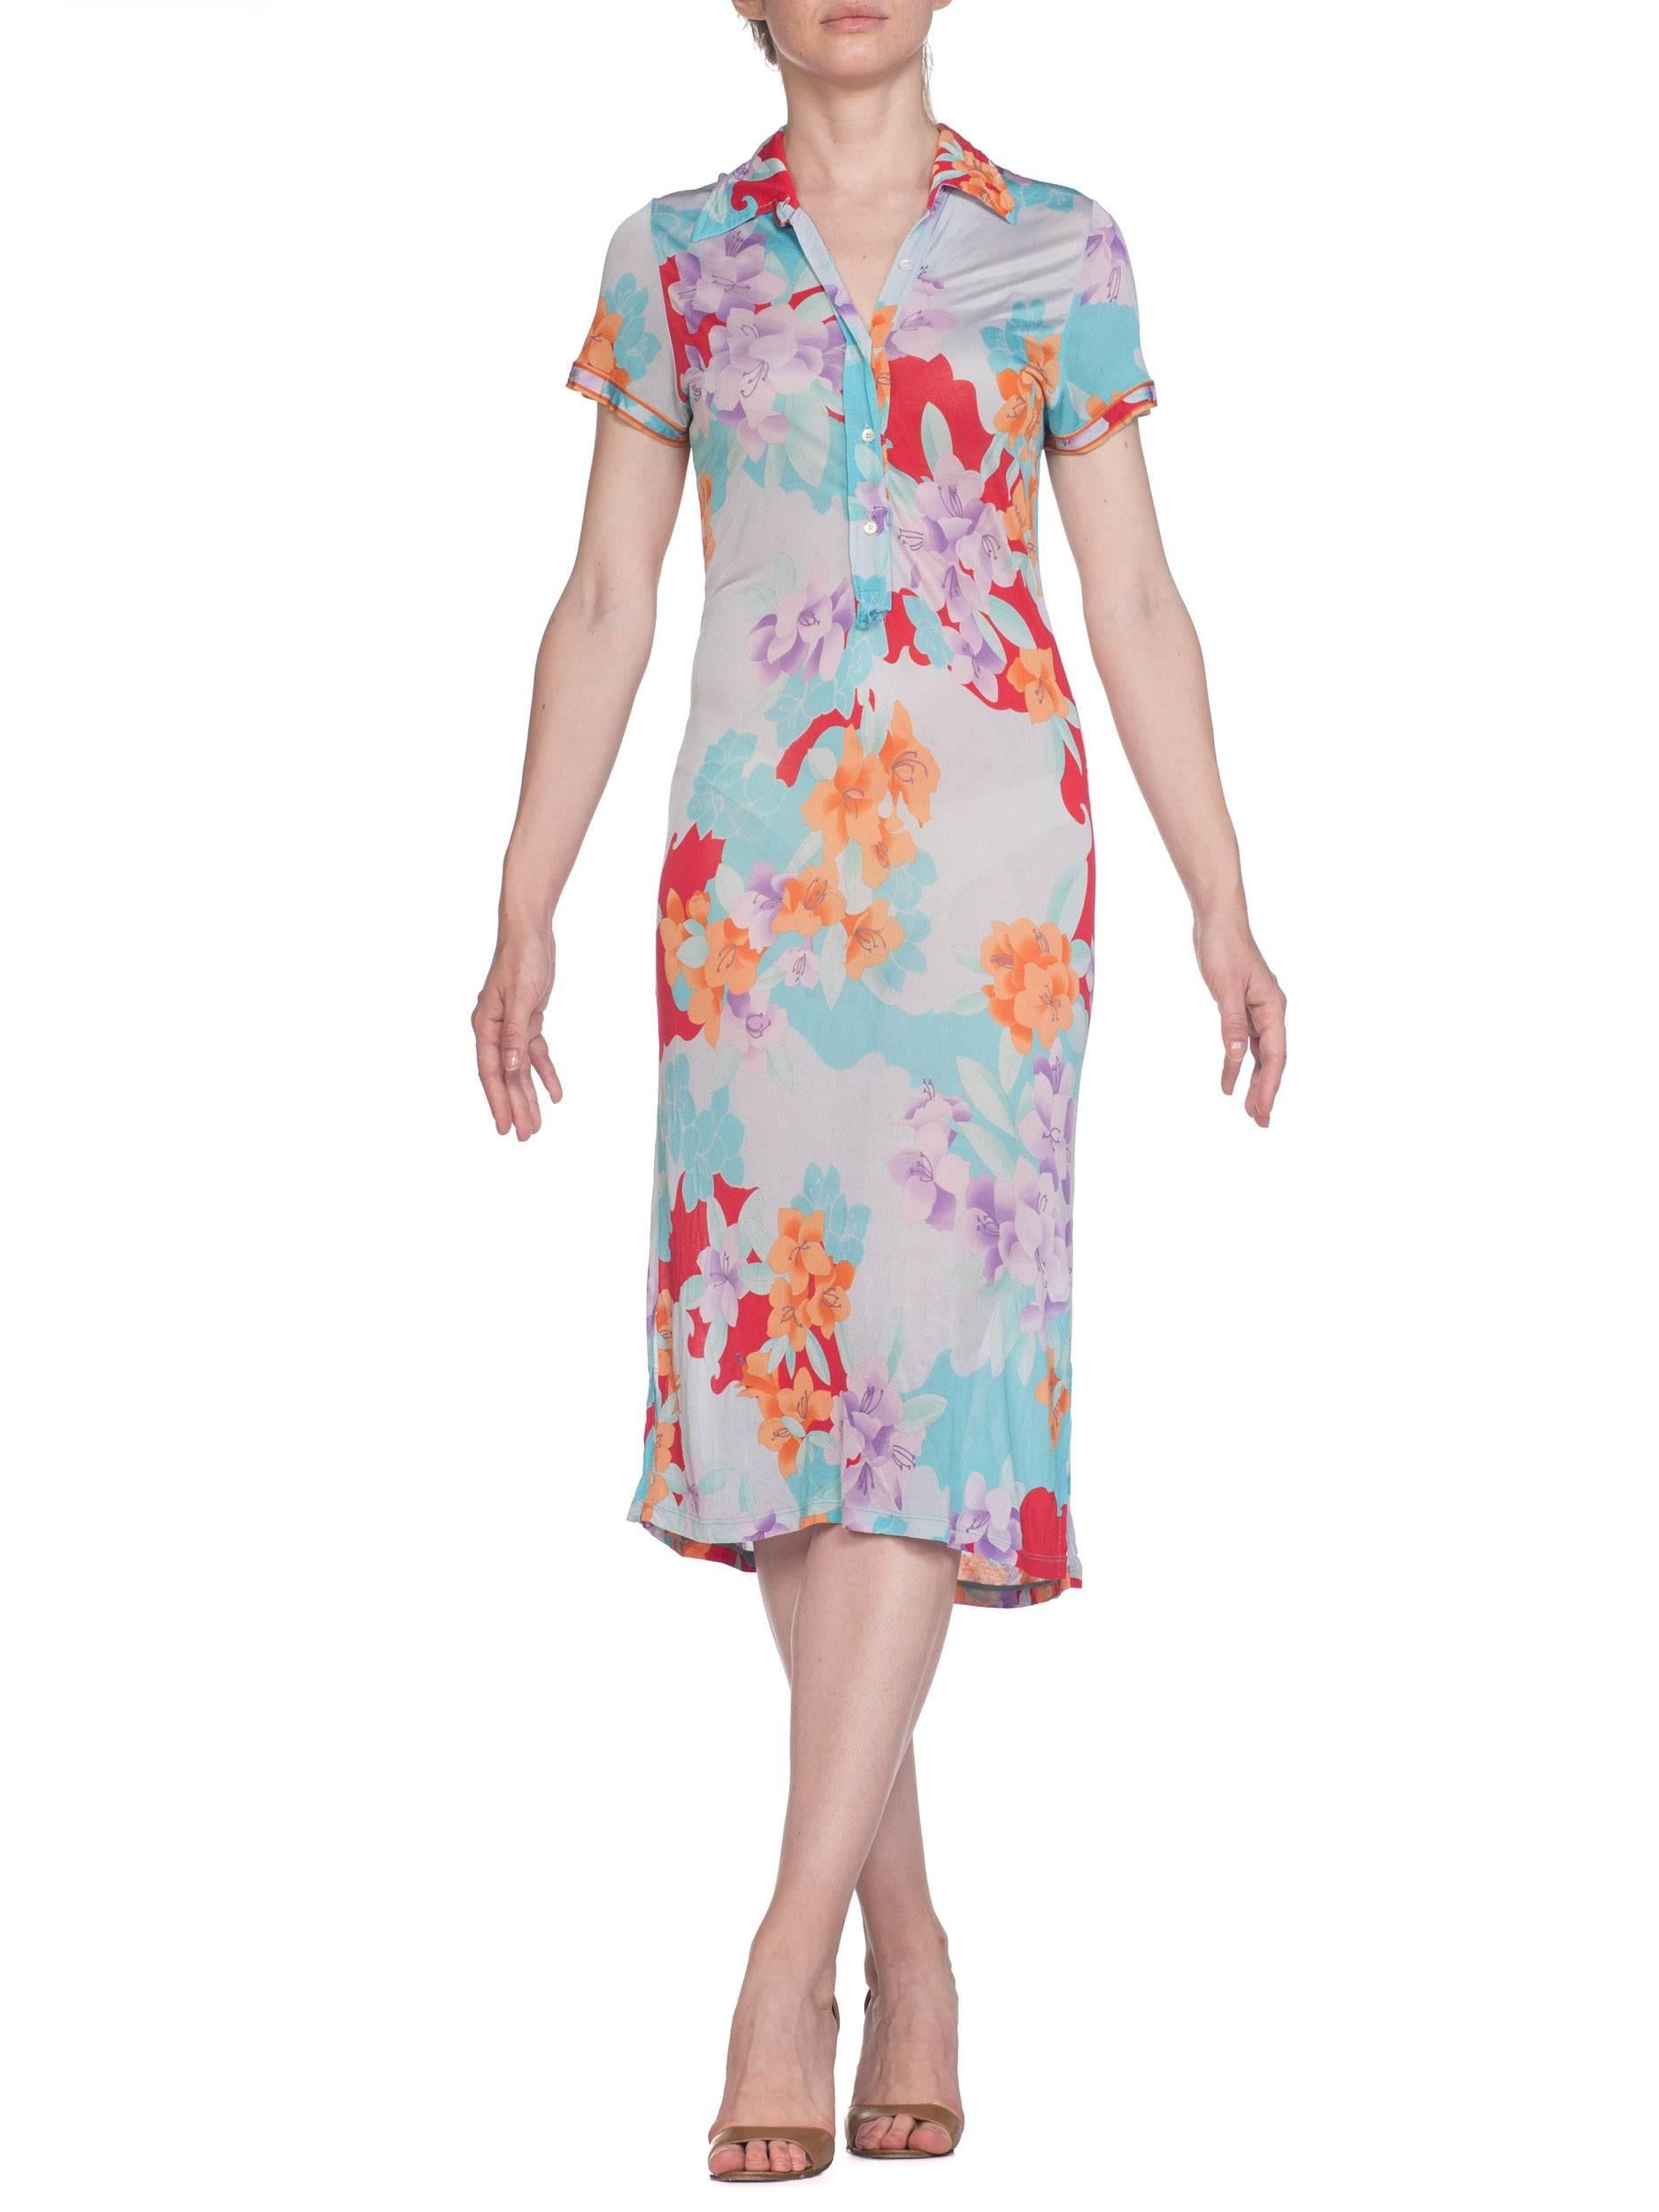 1980S LEONARD Pastel Sheer Rayon Blend Jersey Tropical Floral Print Dress 1